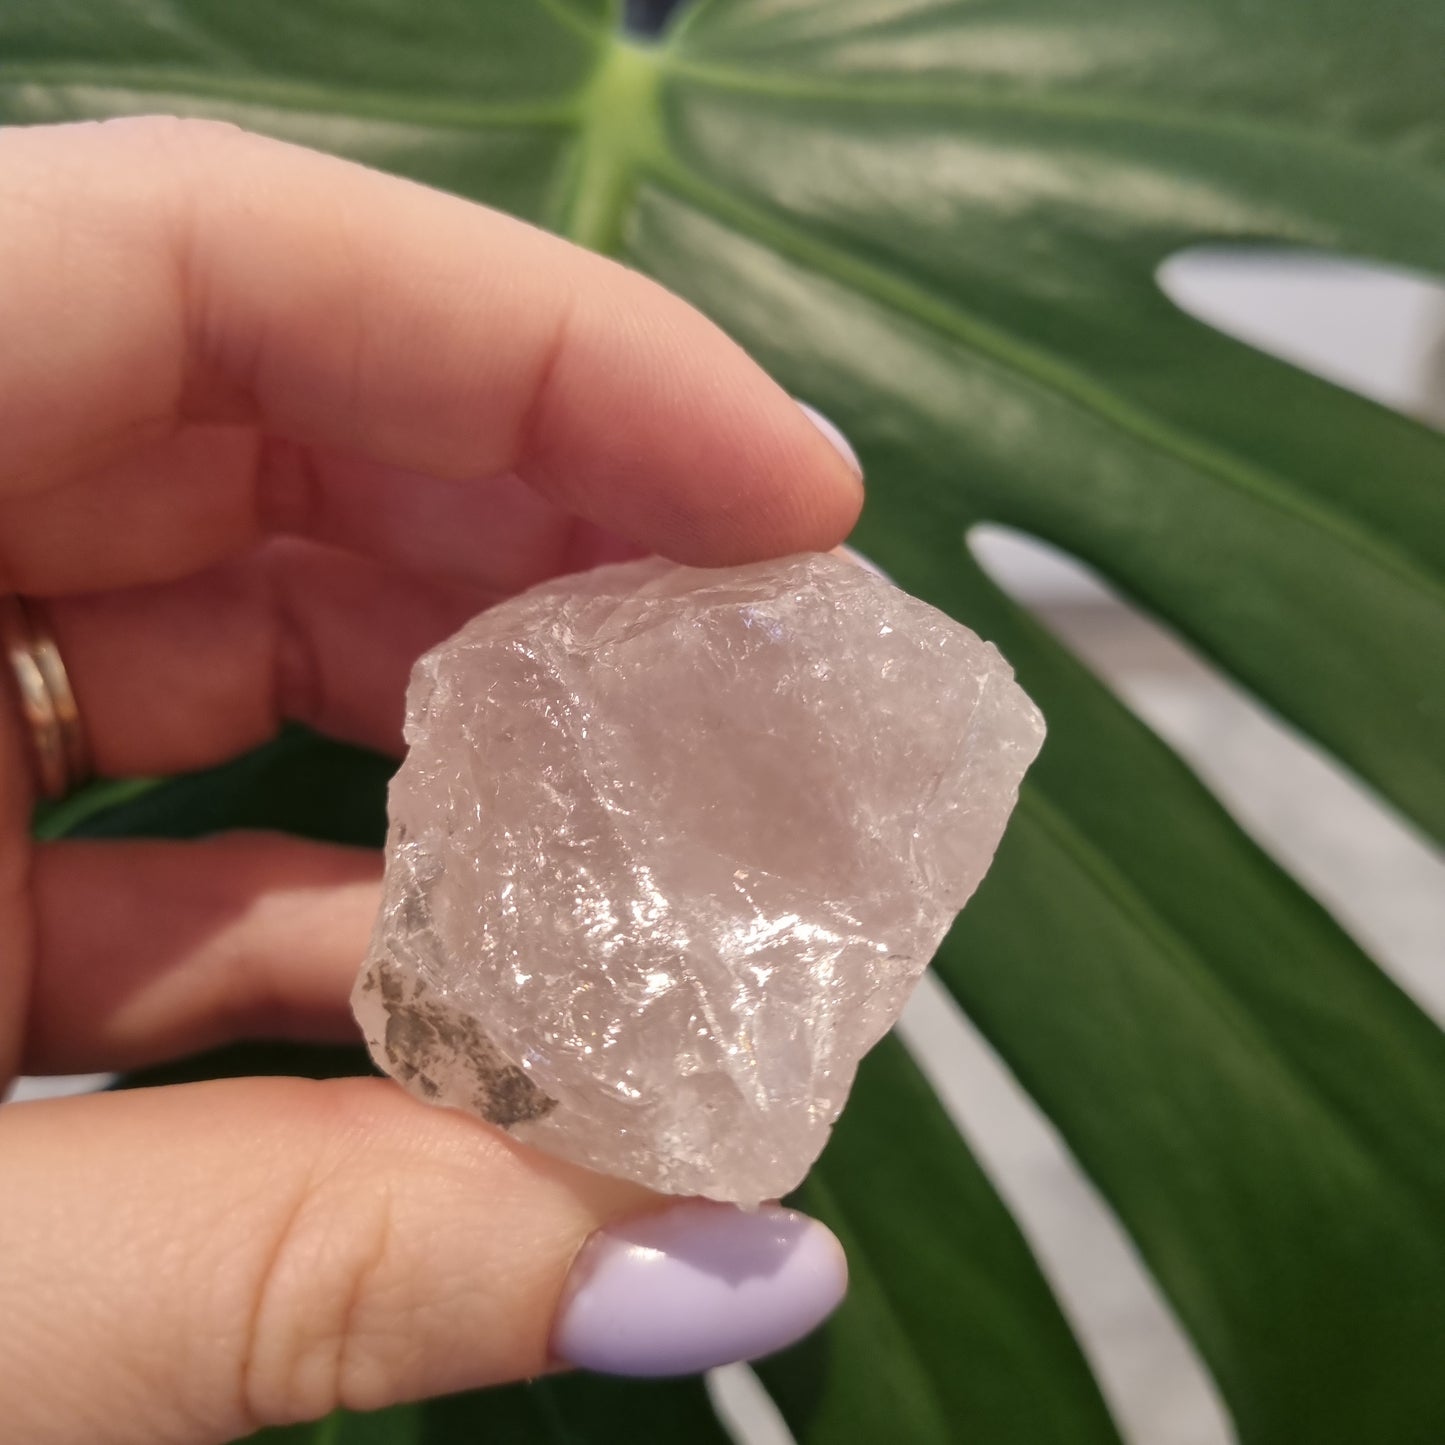 Small Raw Rose Quartz Crystal